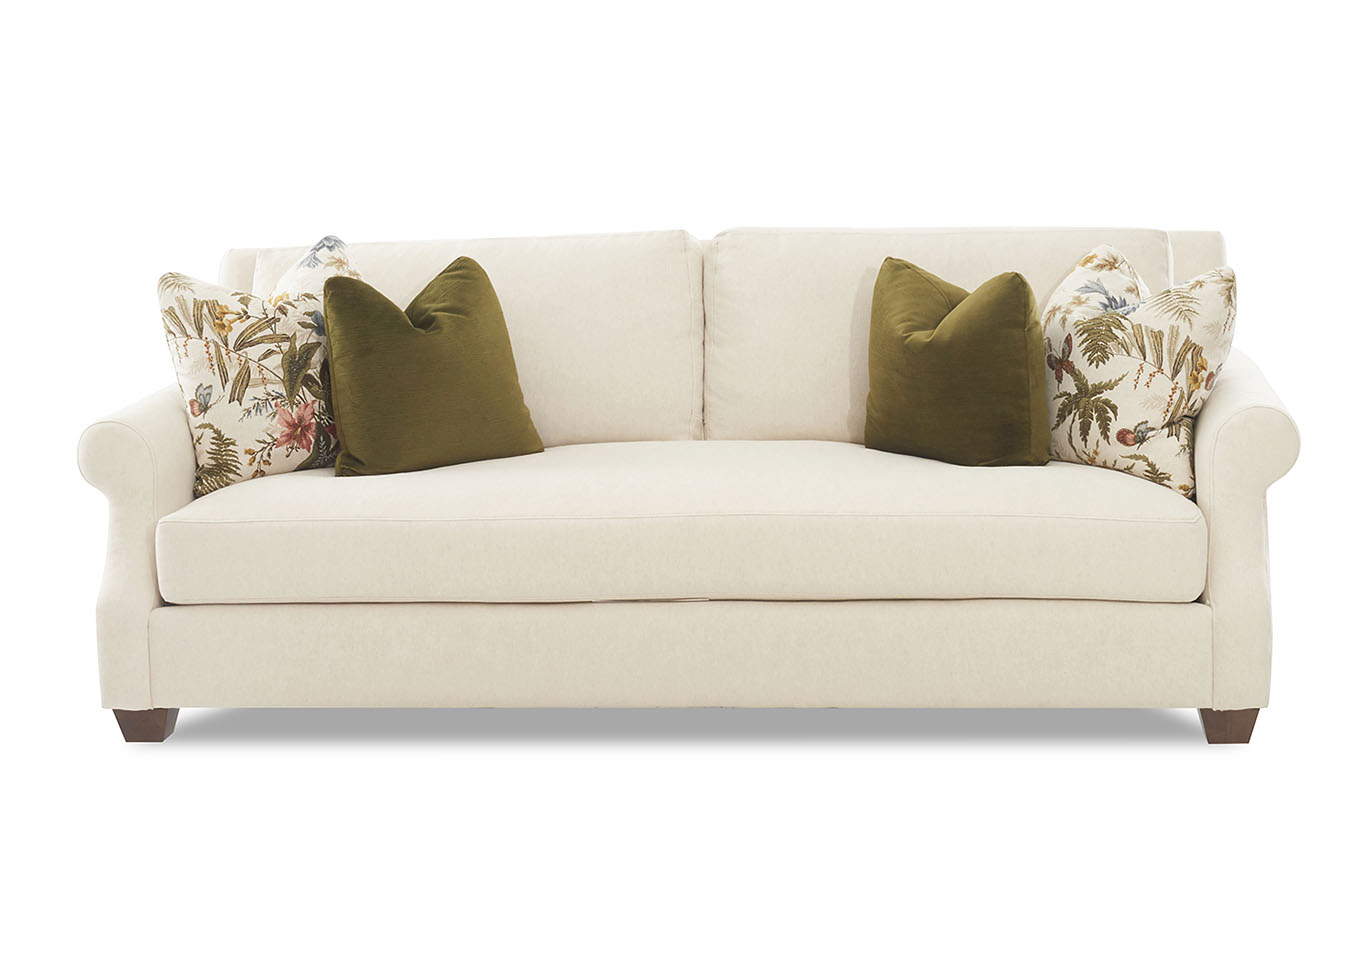 Barrett Bihar Natural Stationary Fabric Sofa,Klaussner Home Furnishings